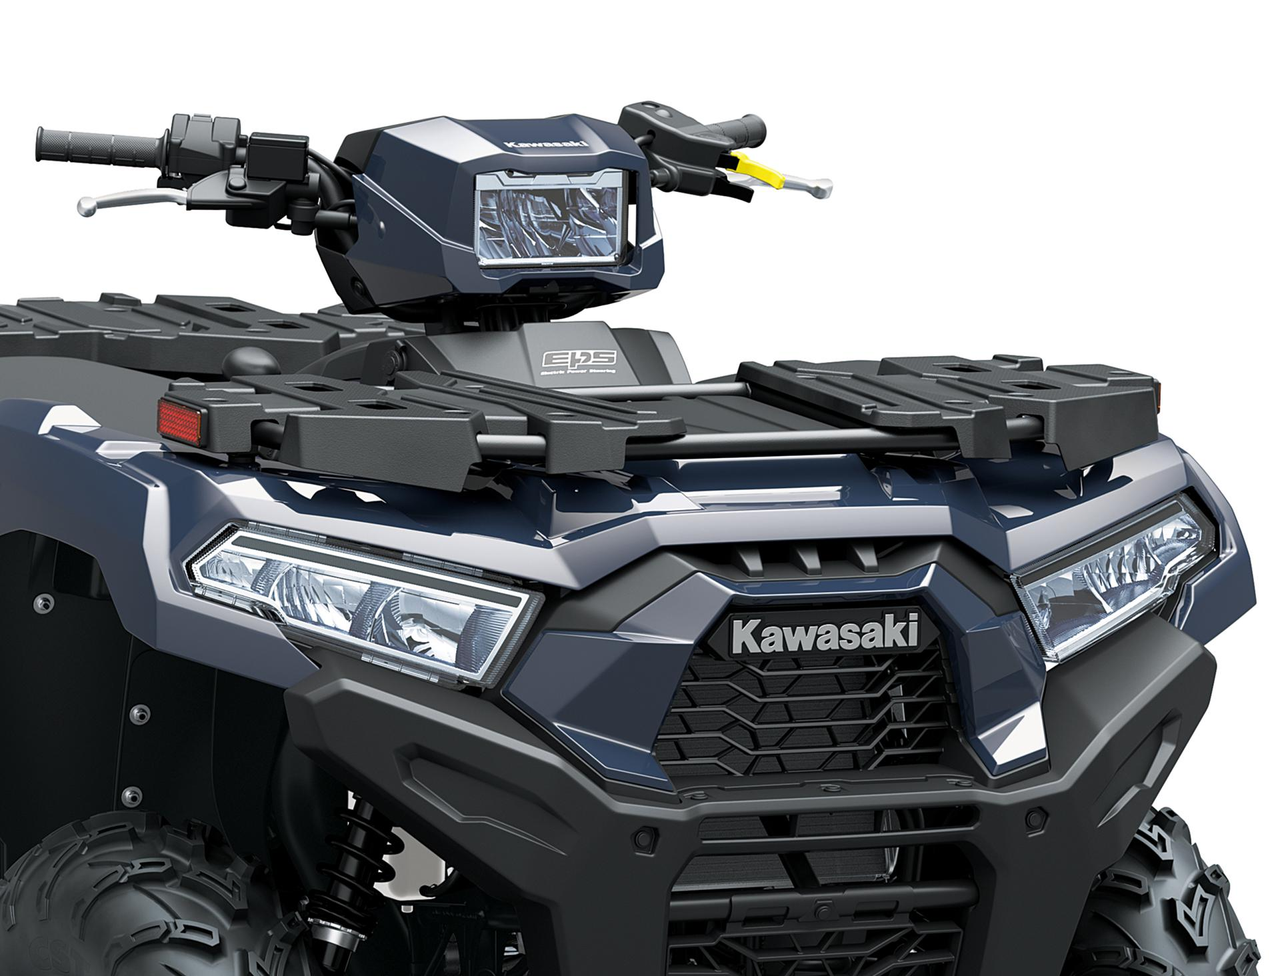 3D “Kawasaki” Emblem